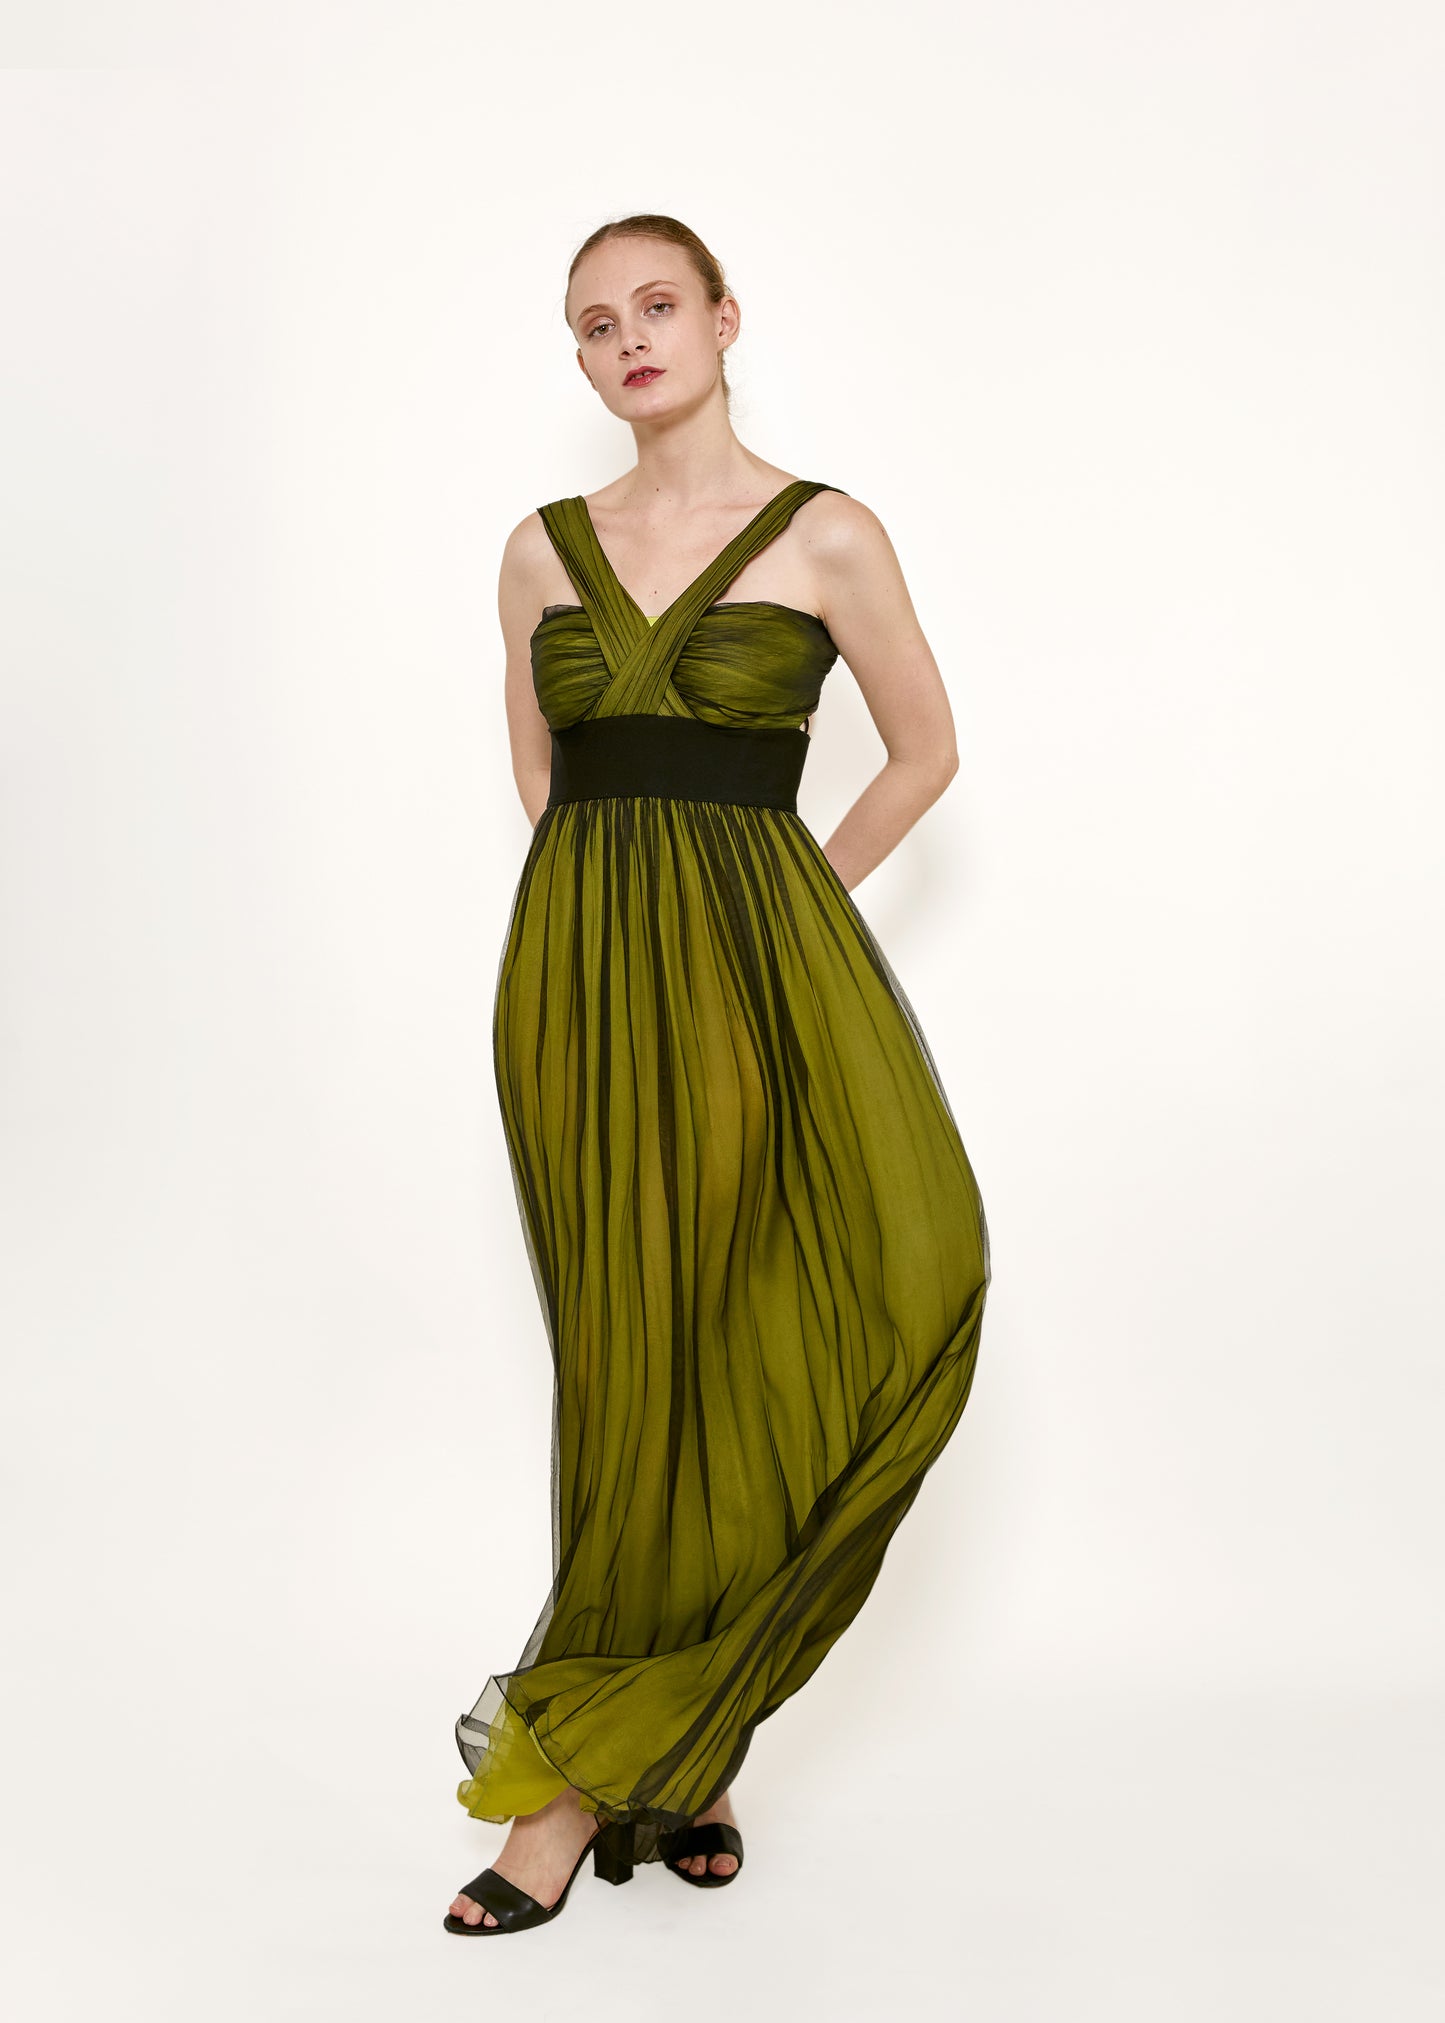 Dolce & Gabbana Green/Black Cross-Front Chiffon Gown